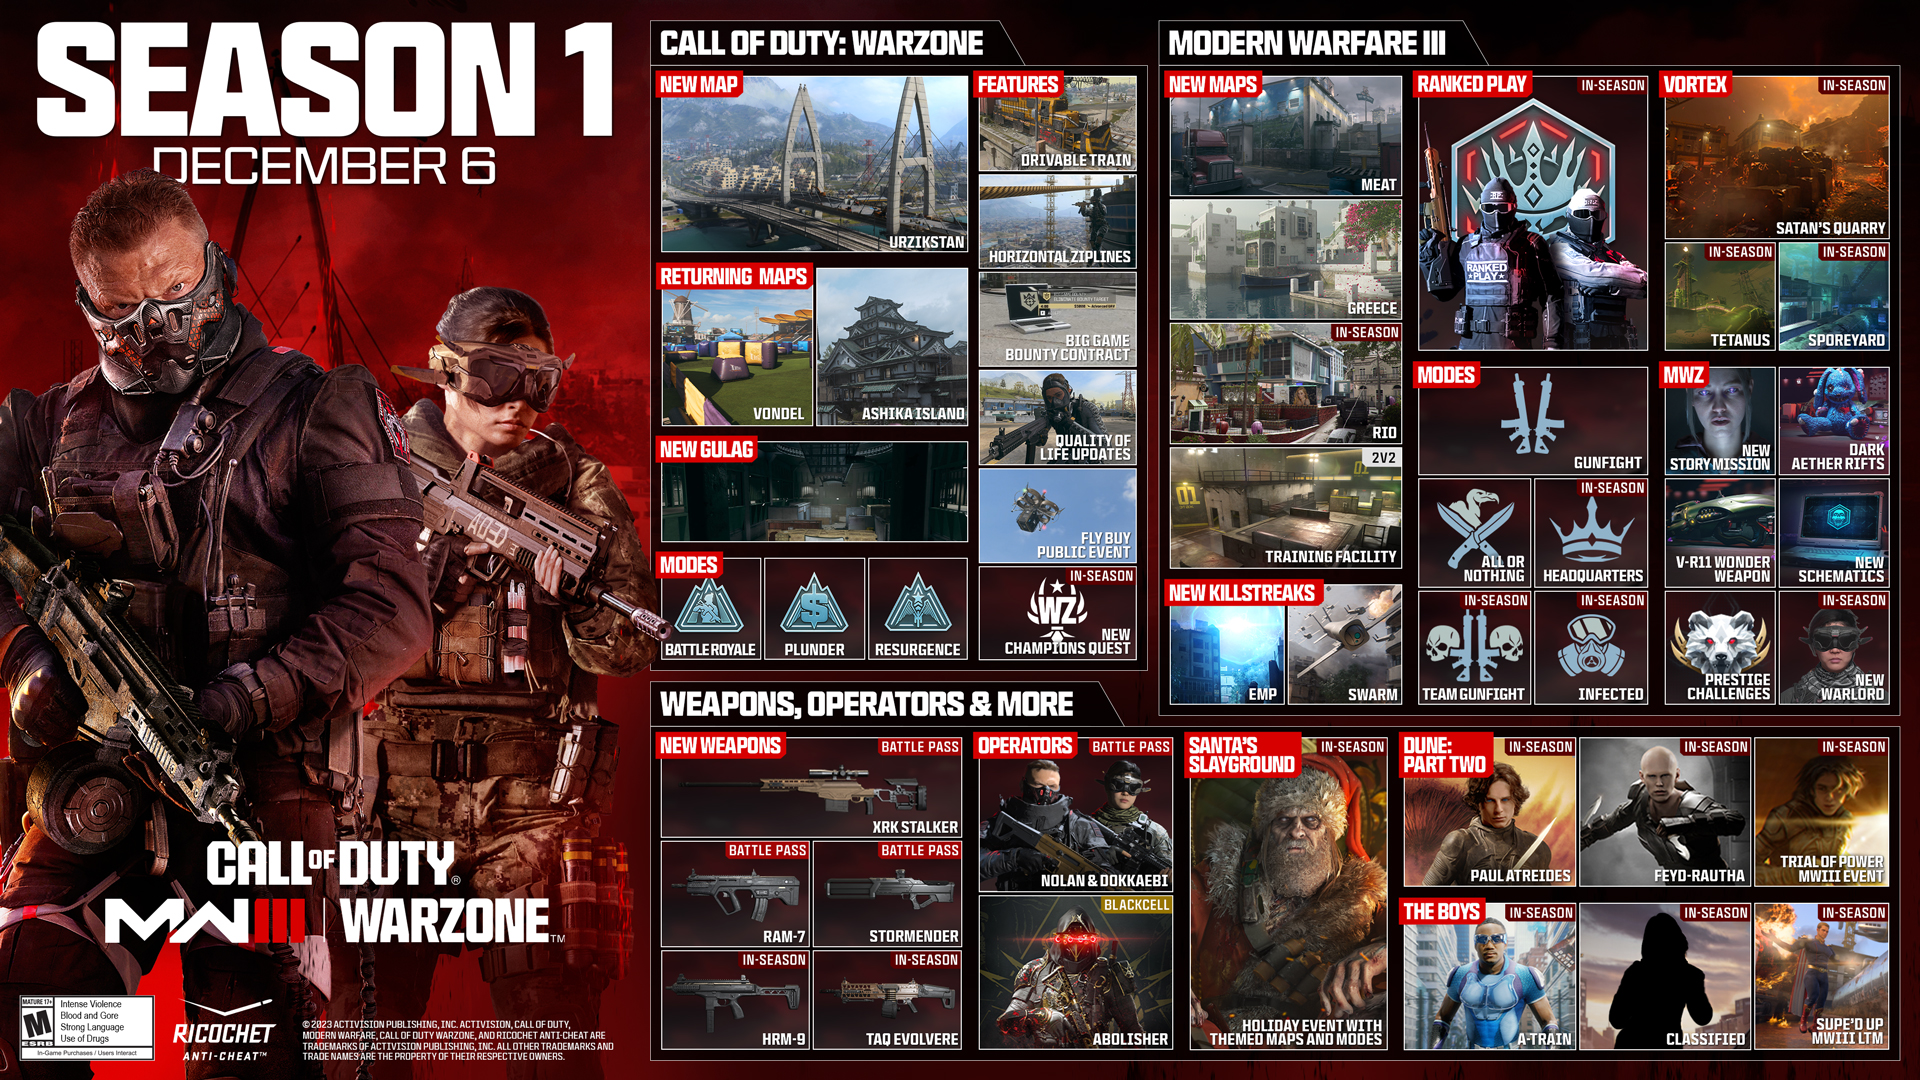 Call of Duty®: Modern Warfare® II PC Trailer, Specs, and Preloading Info